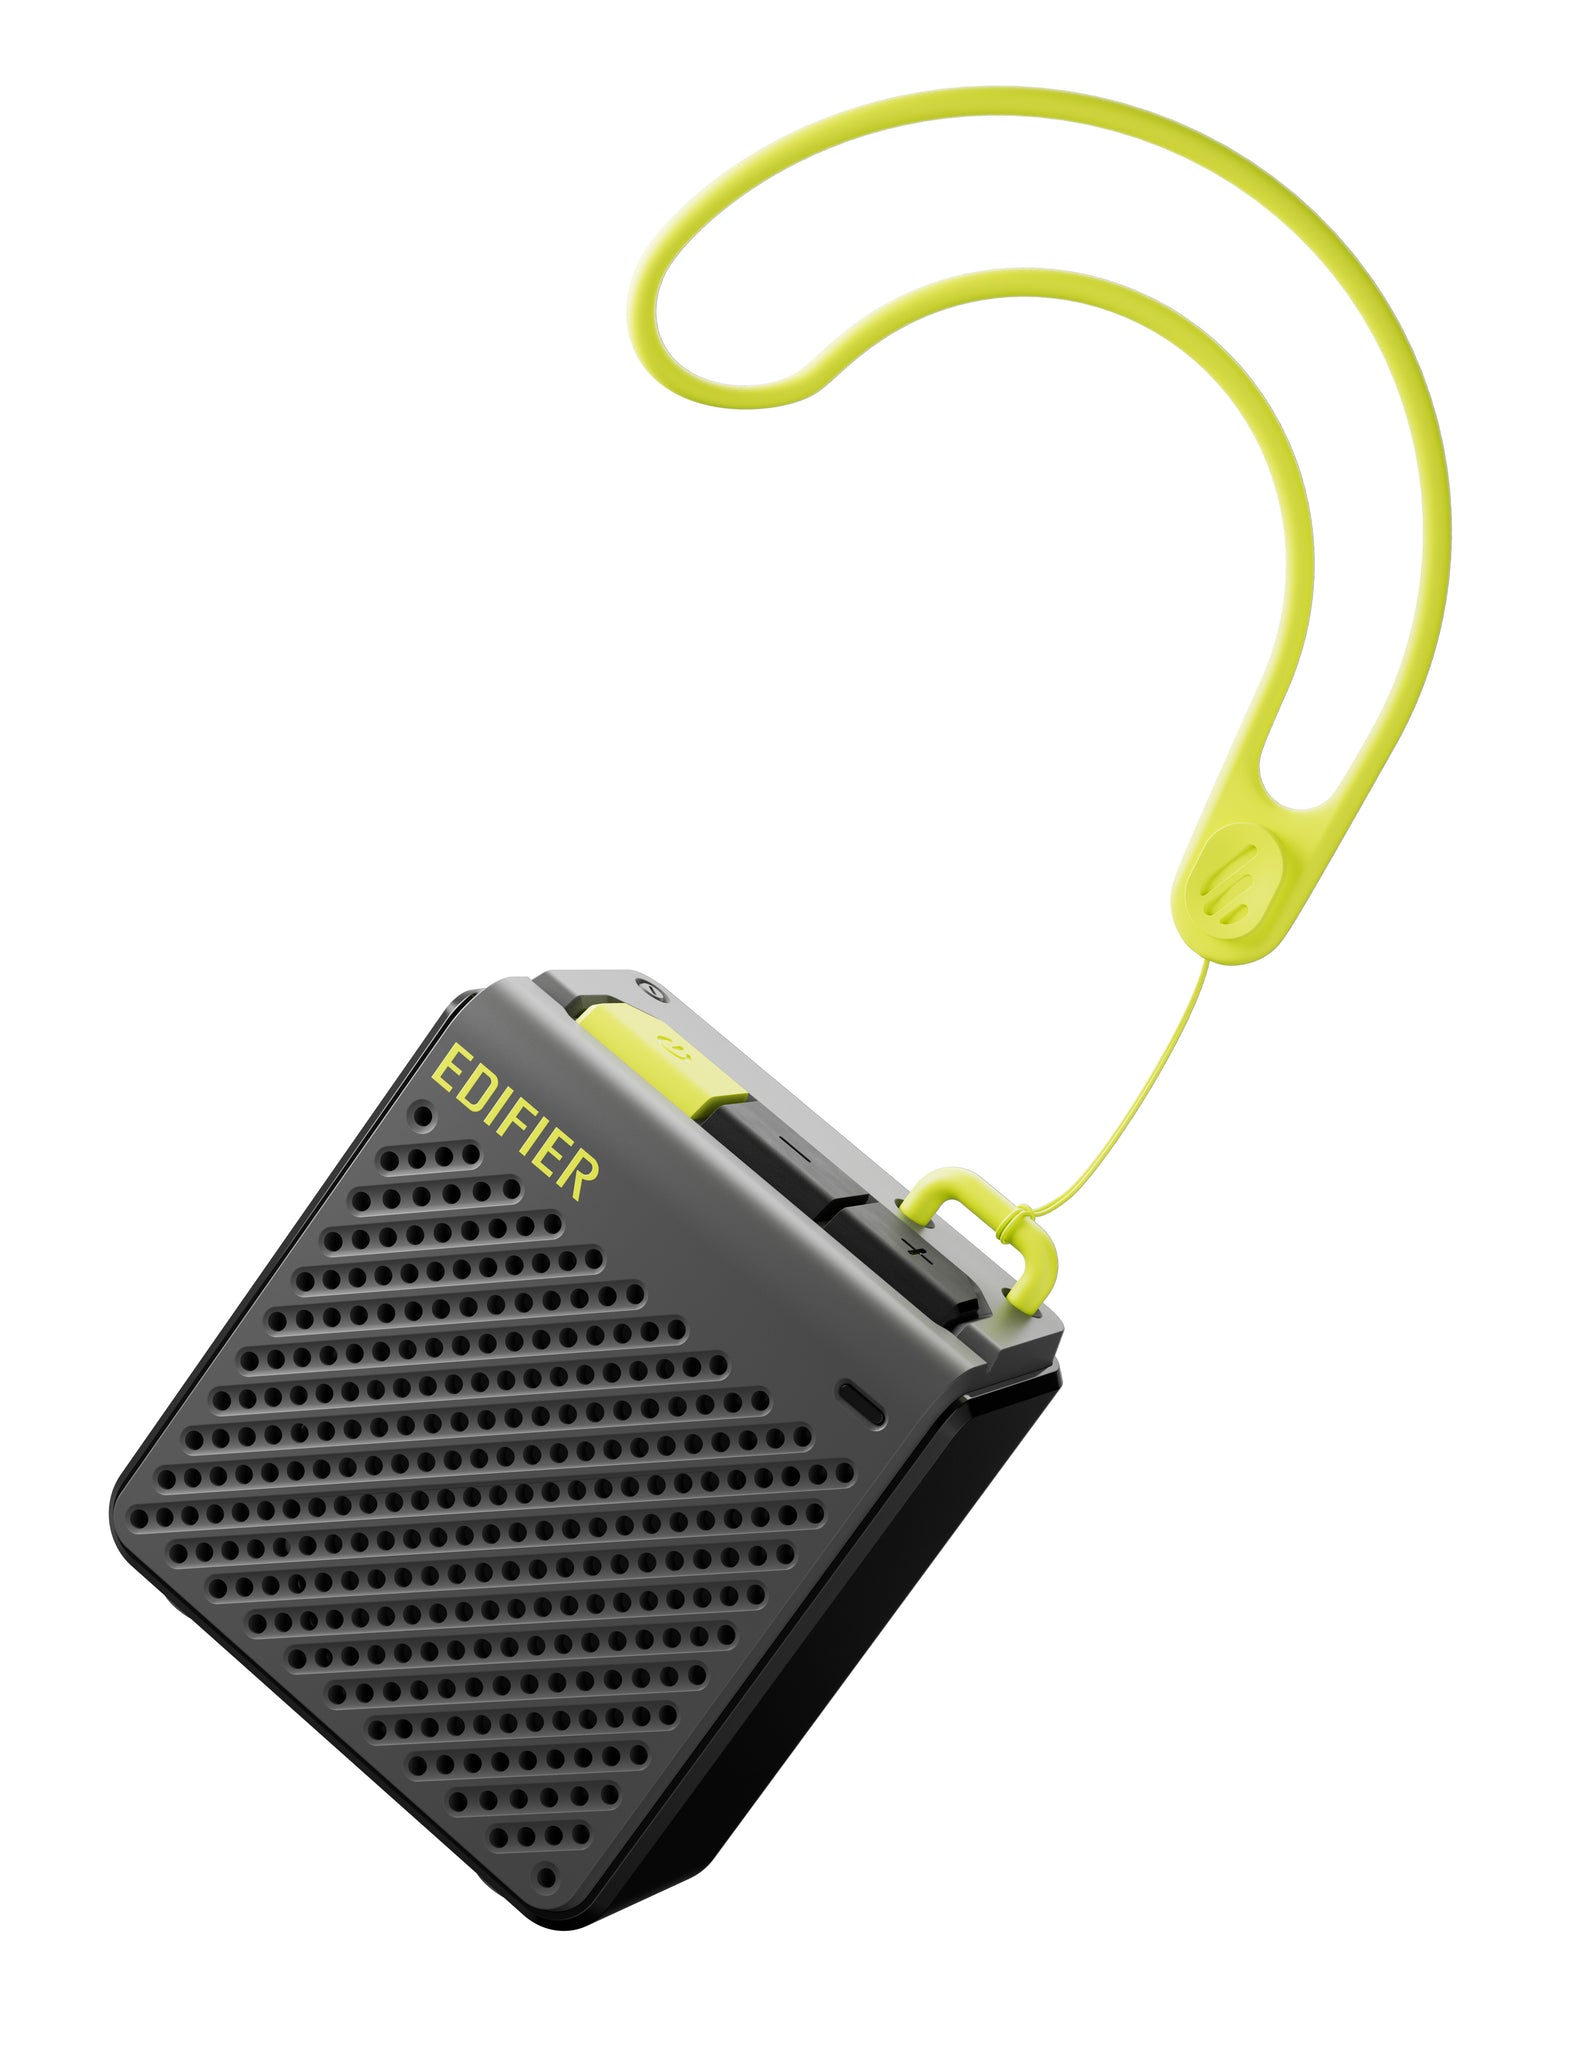 Edifier MP85 Portable Bluetooth Speaker - Grey